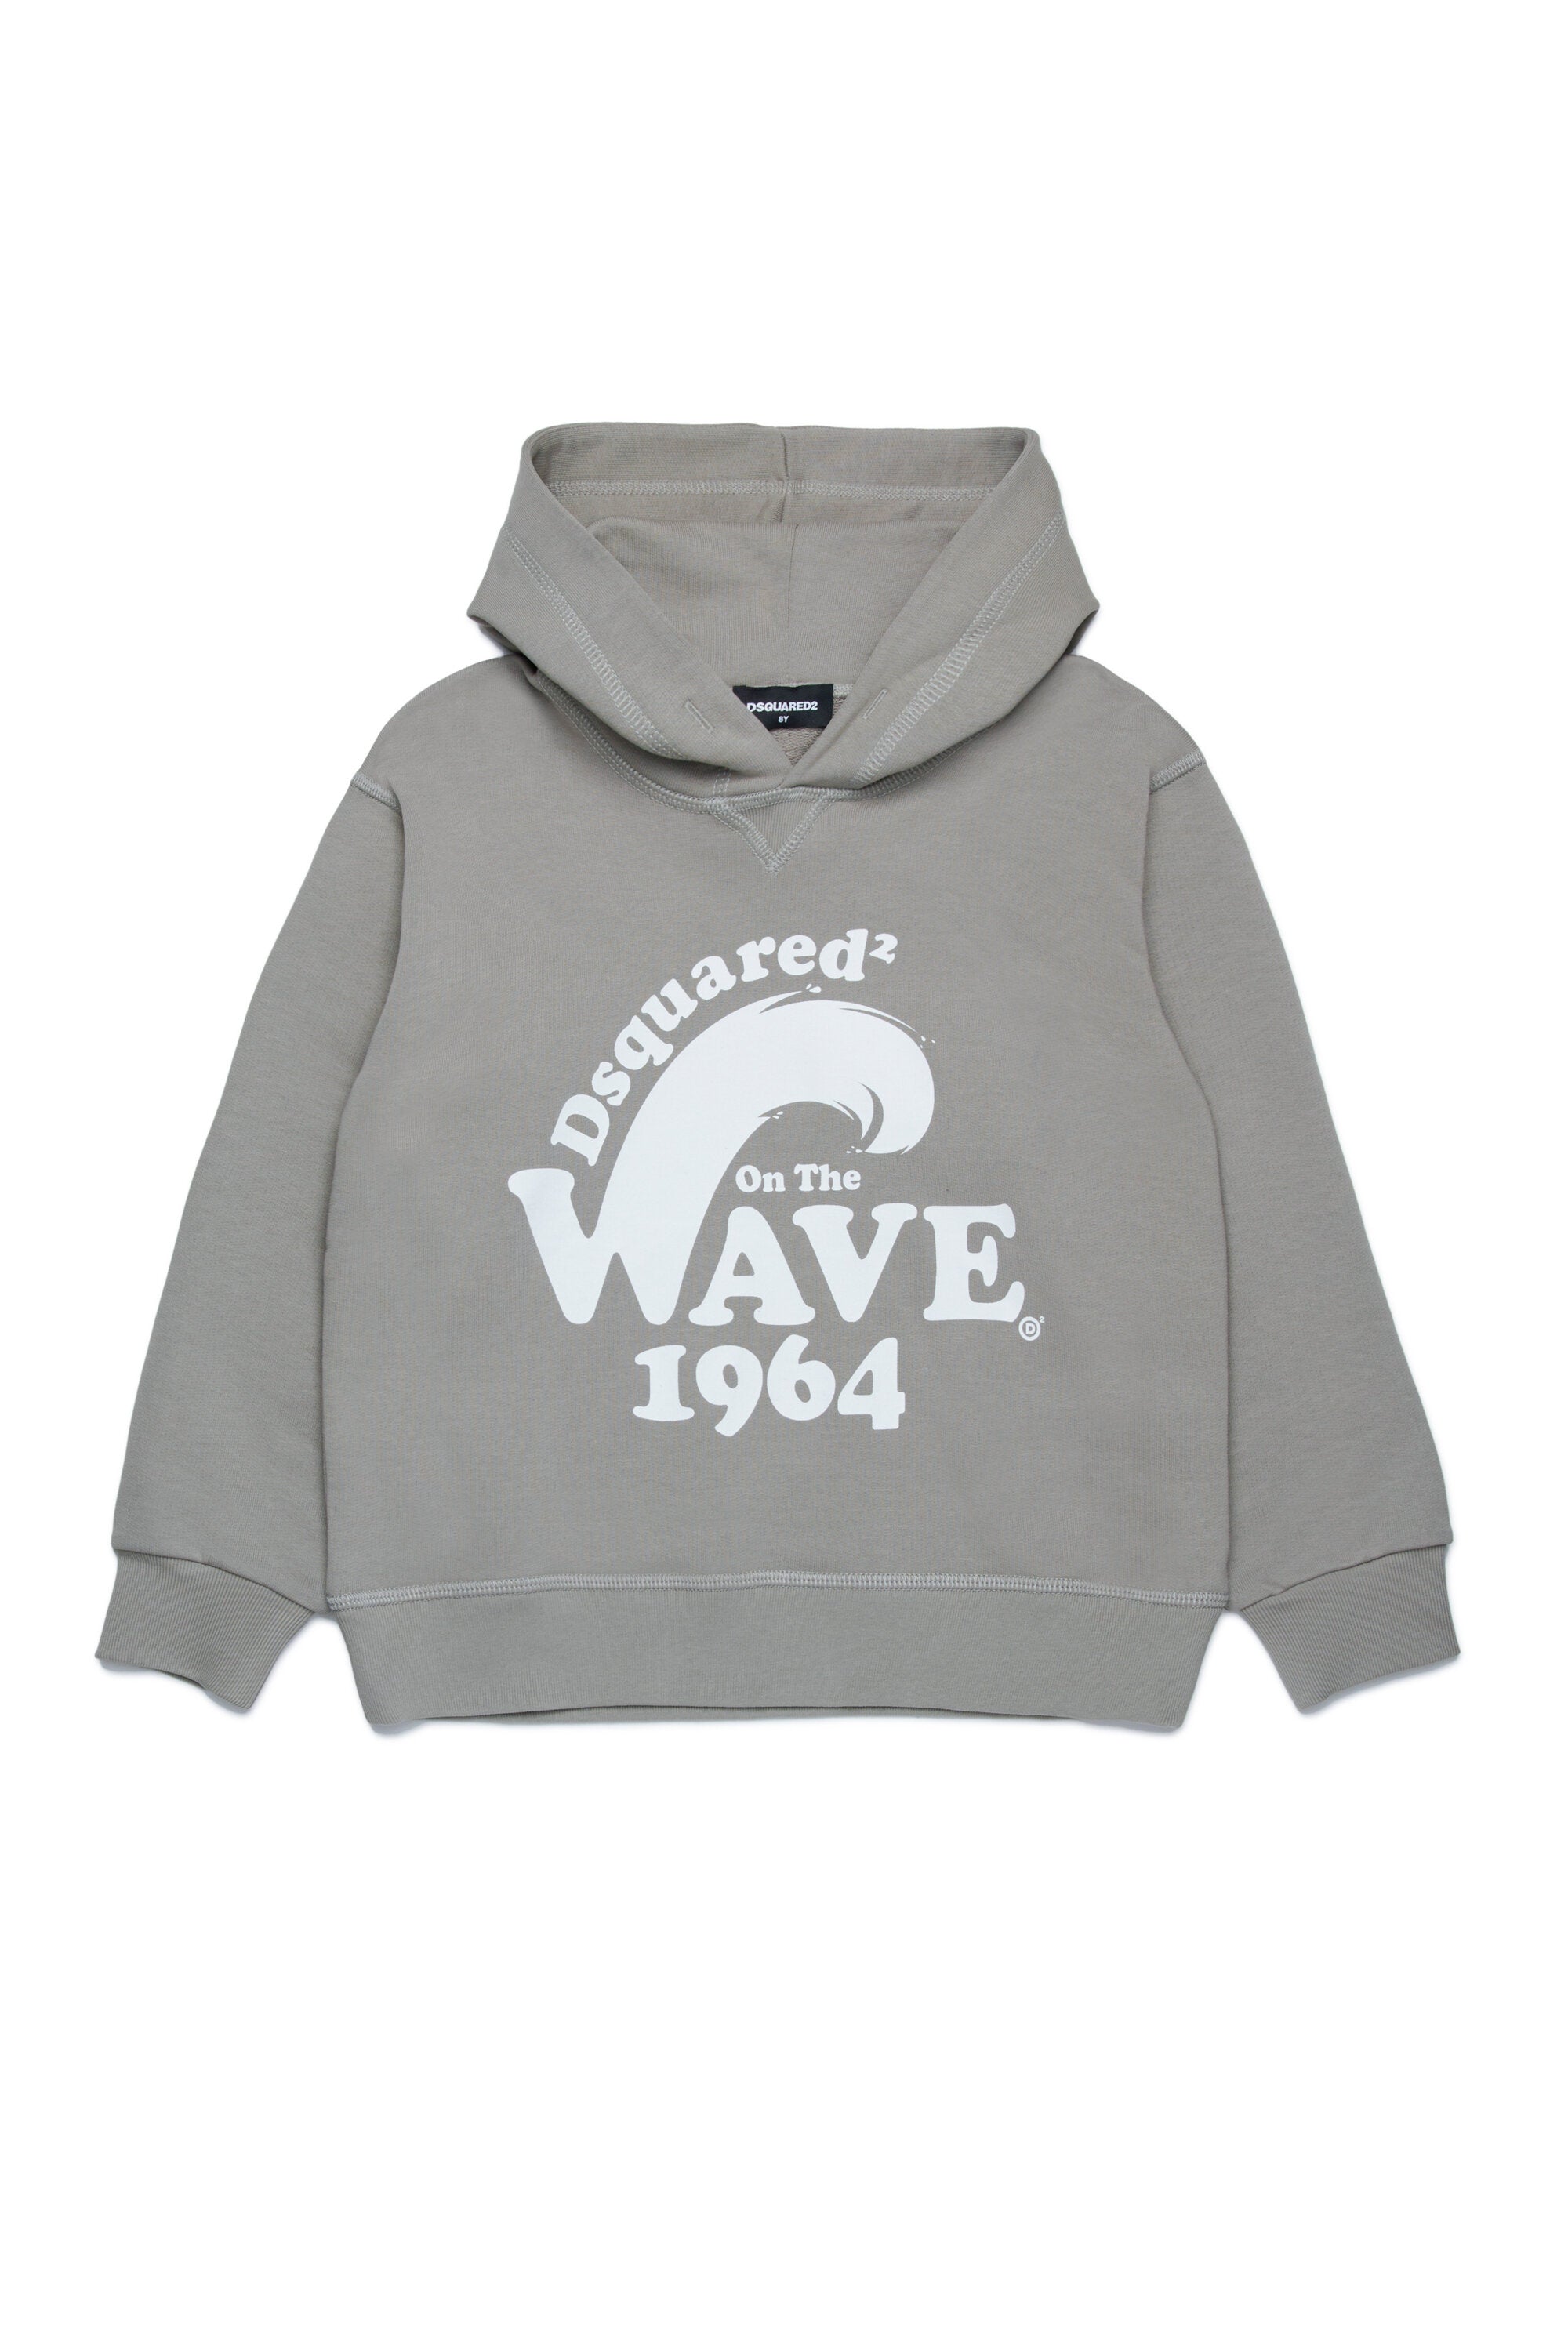 Hooded sweatshirt with Wave 1964 graphics